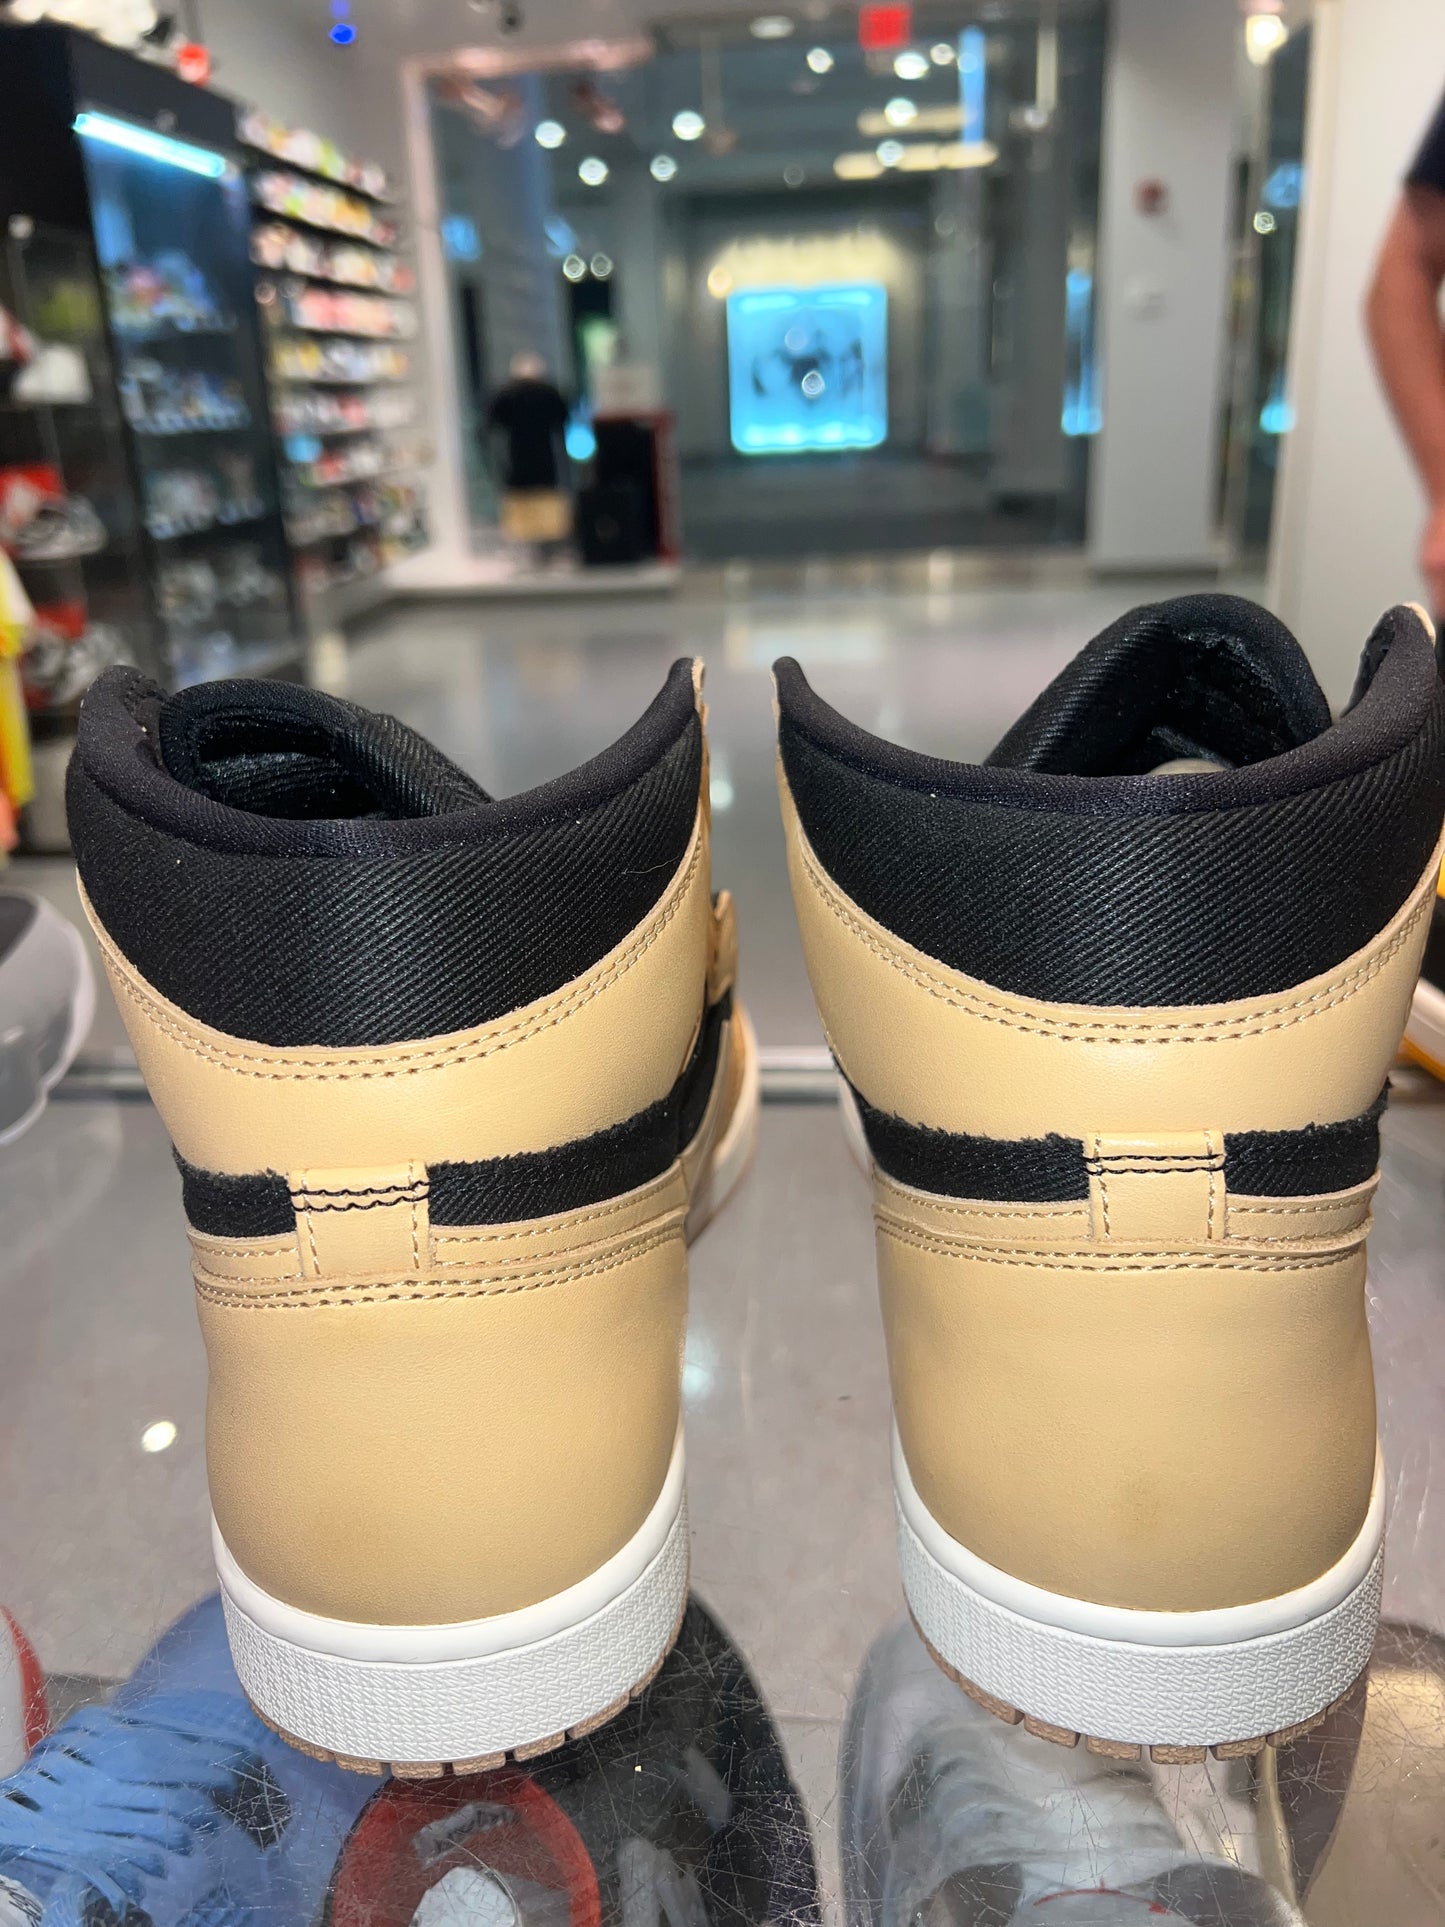 Size 10 Air Jordan 1 “Heriloom” Brand New (Mall)